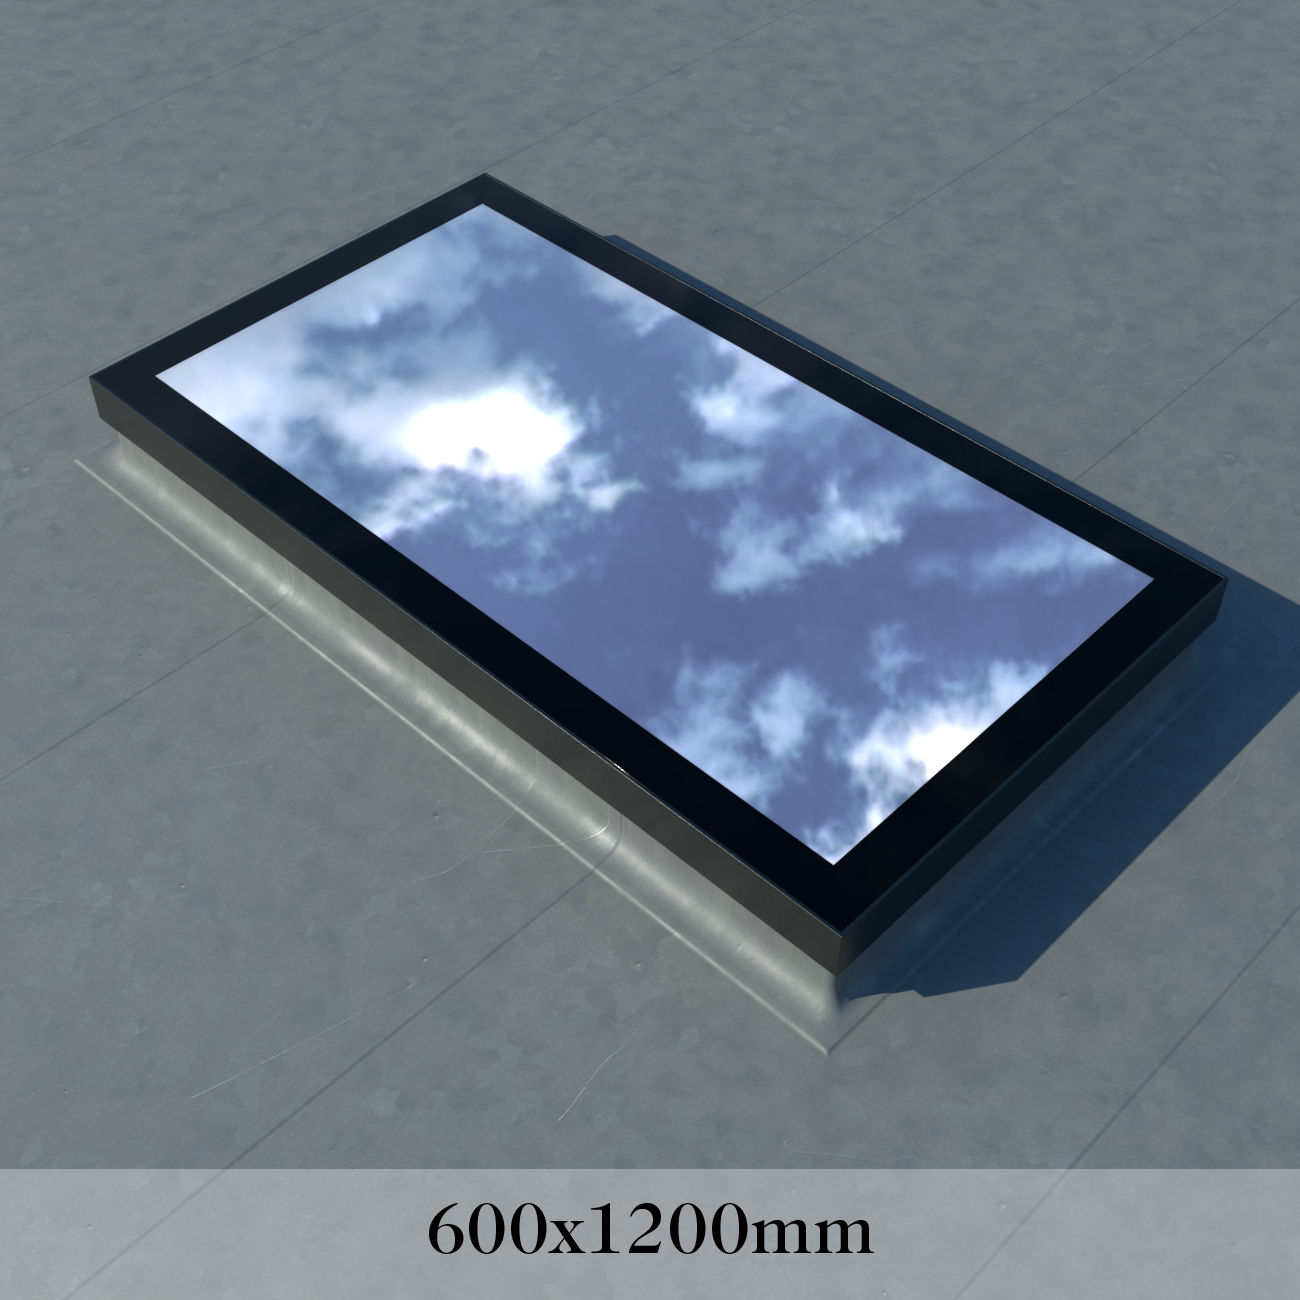 Framed Skylight 600 x 1200 mm – Double glazed